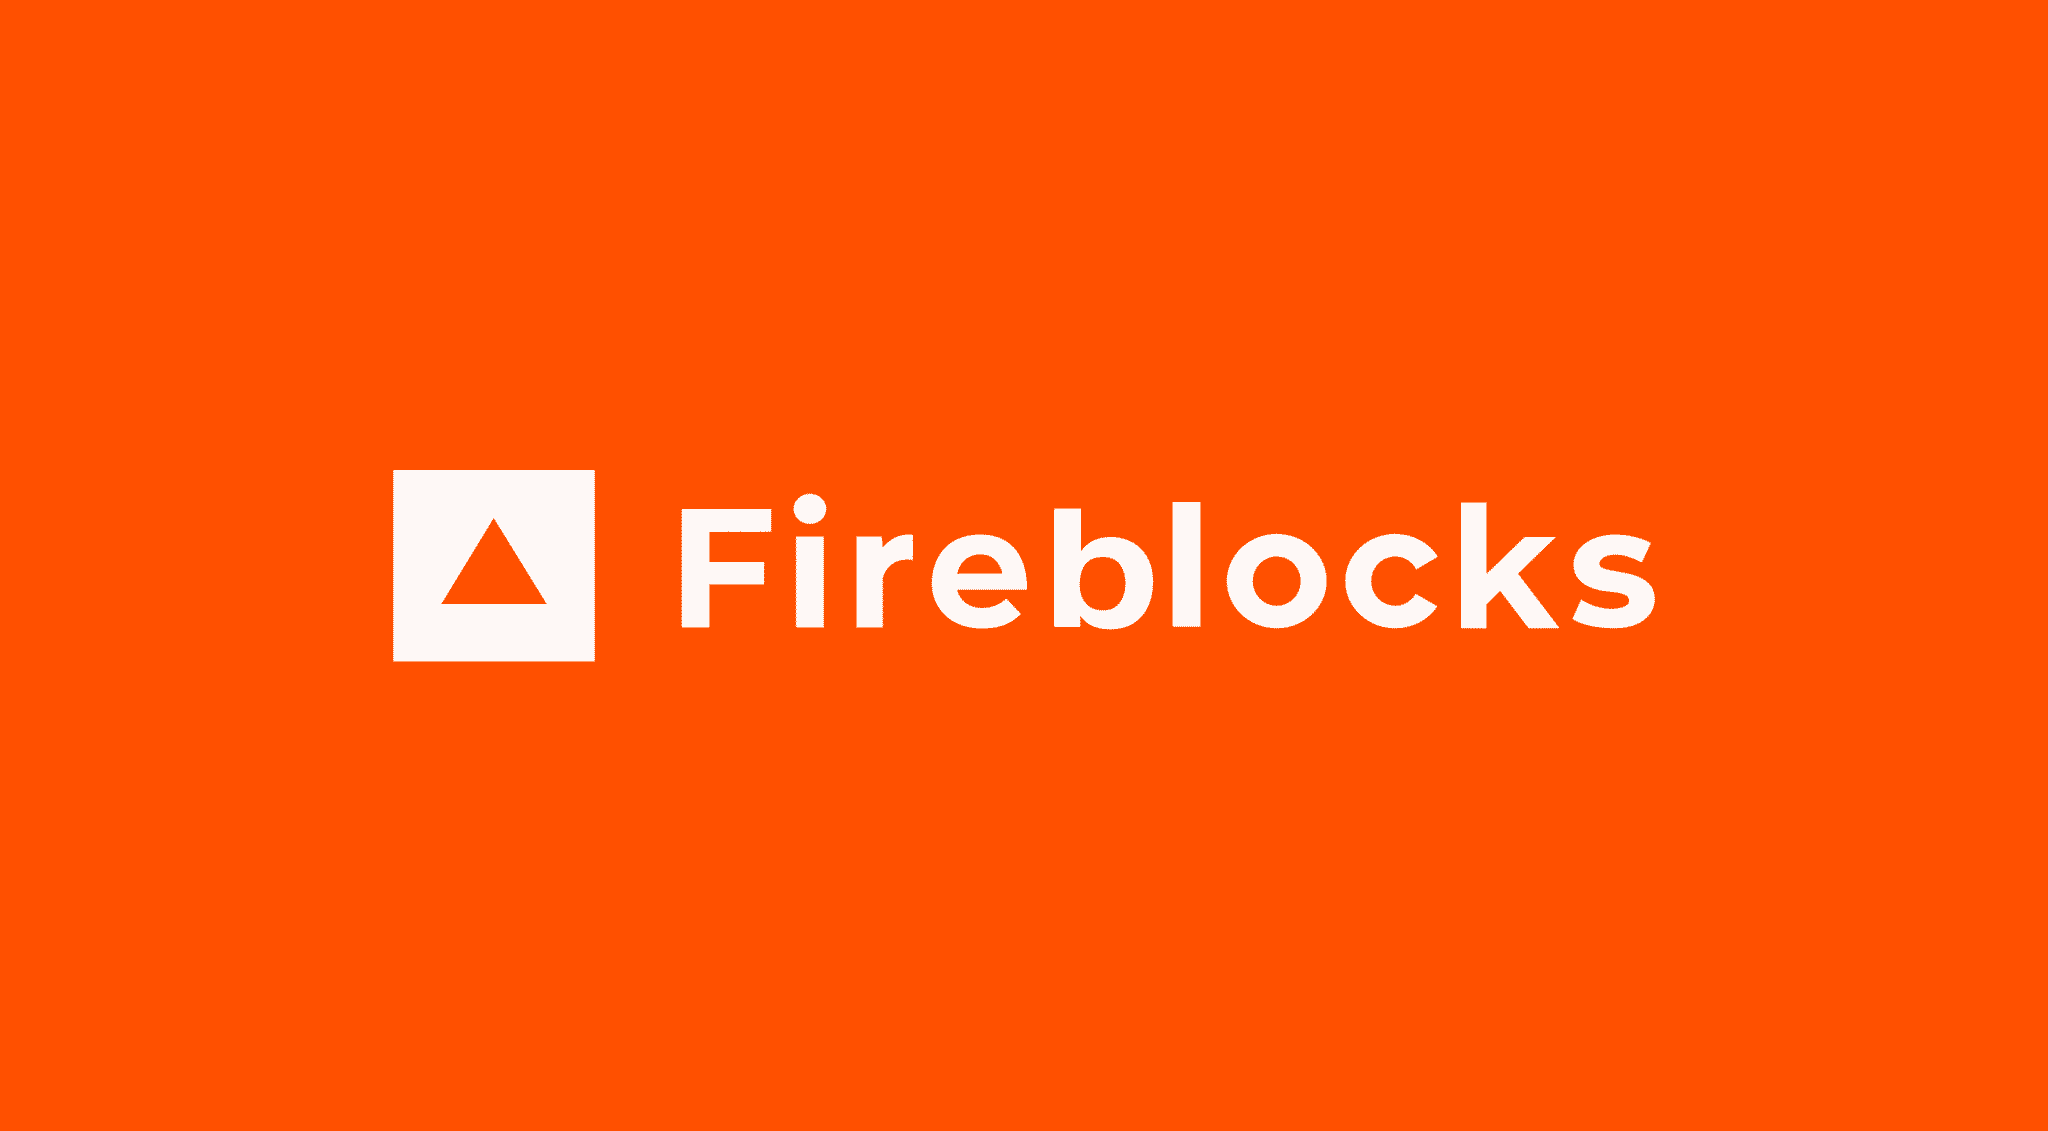 Fireblocks raises $310M at $2B valuation